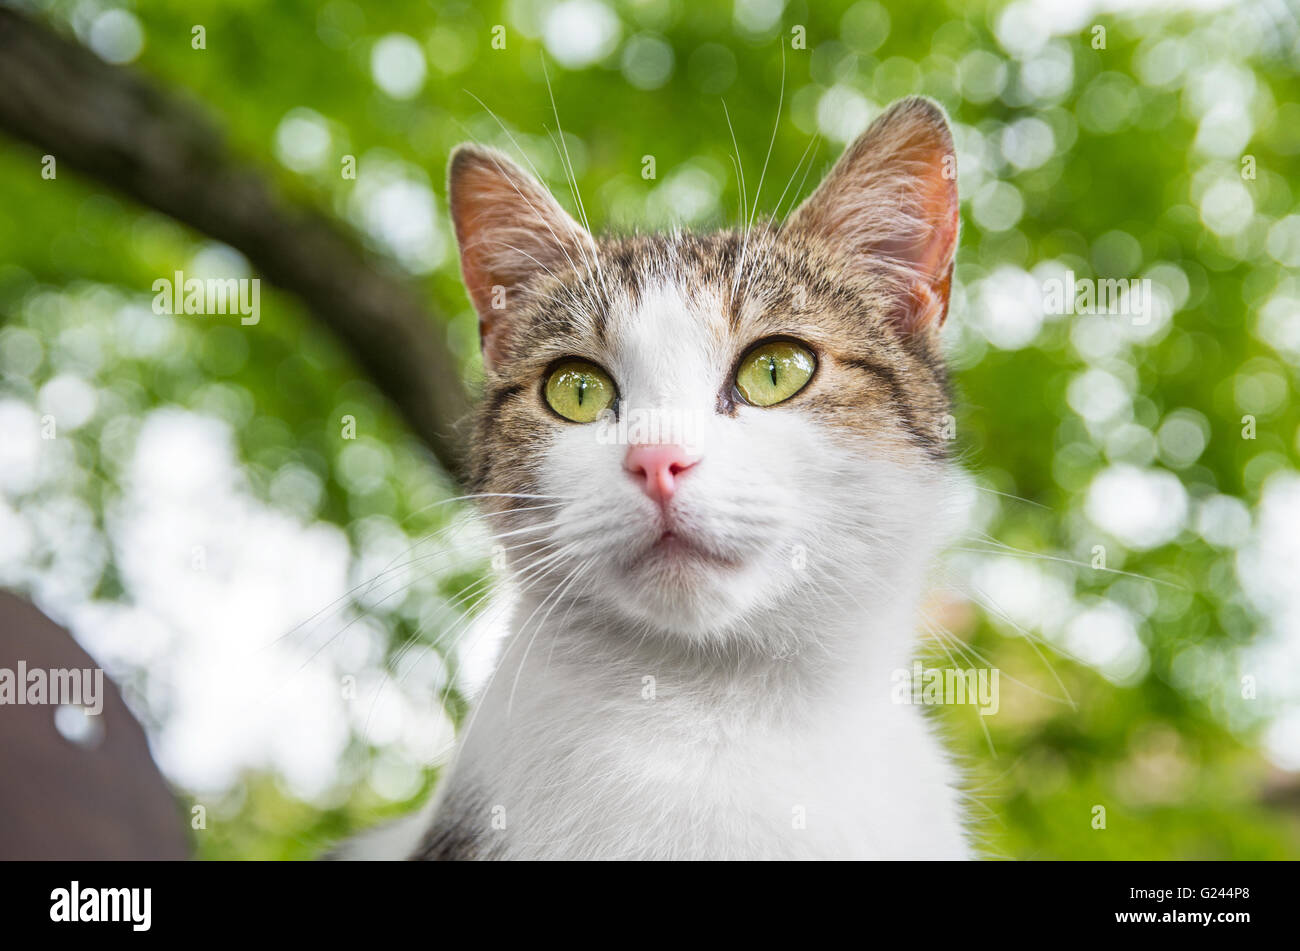 Curious cat portrait under tree Stock Photo